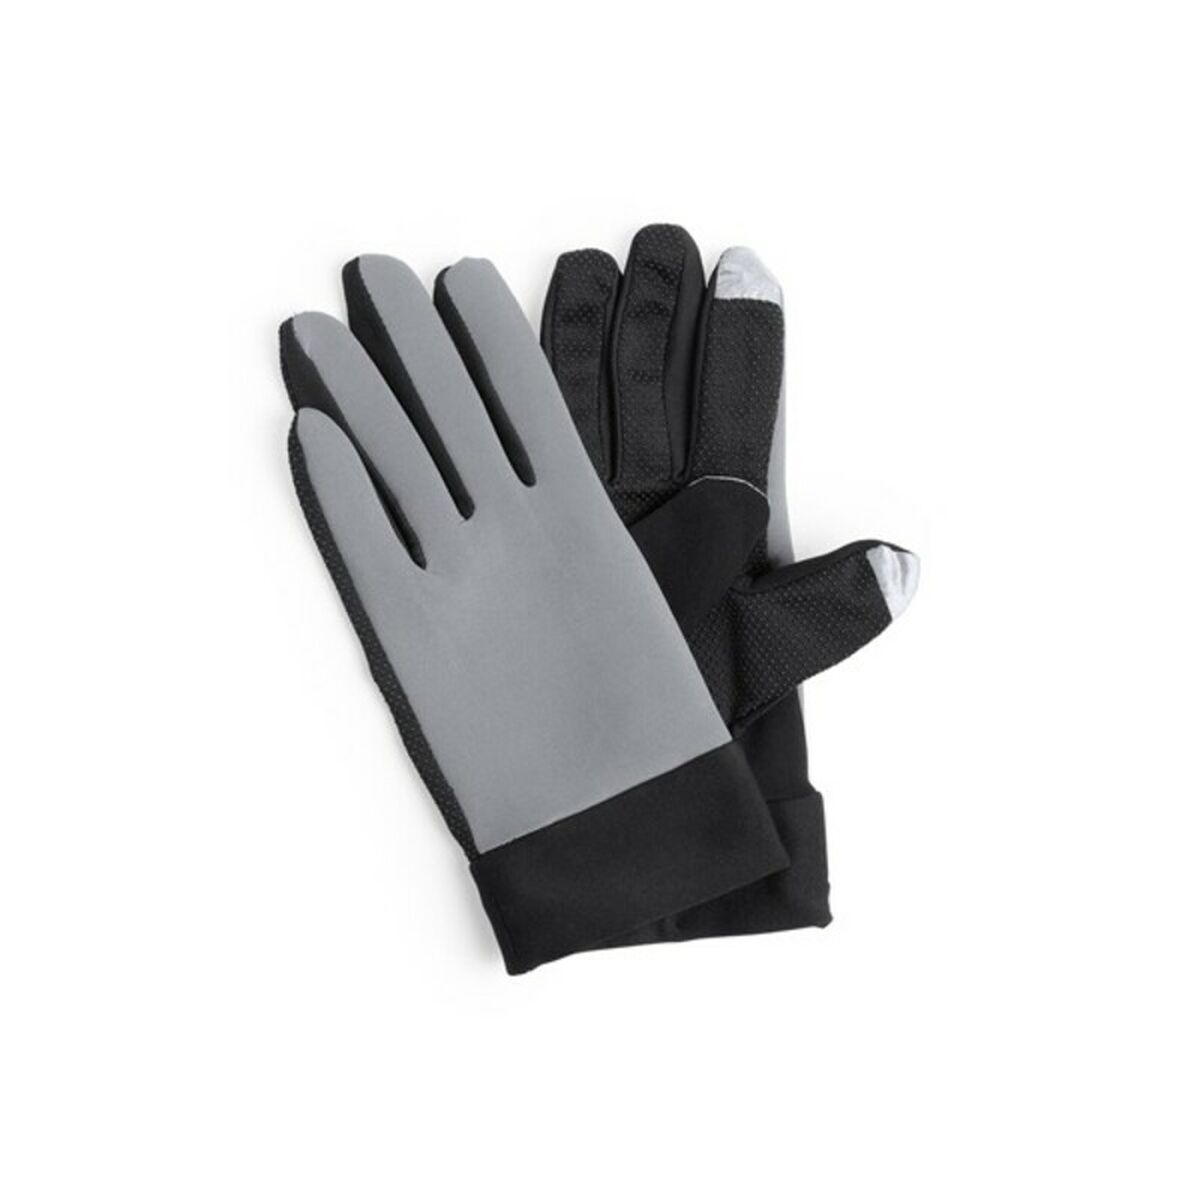 Gloves 145917 Sporting